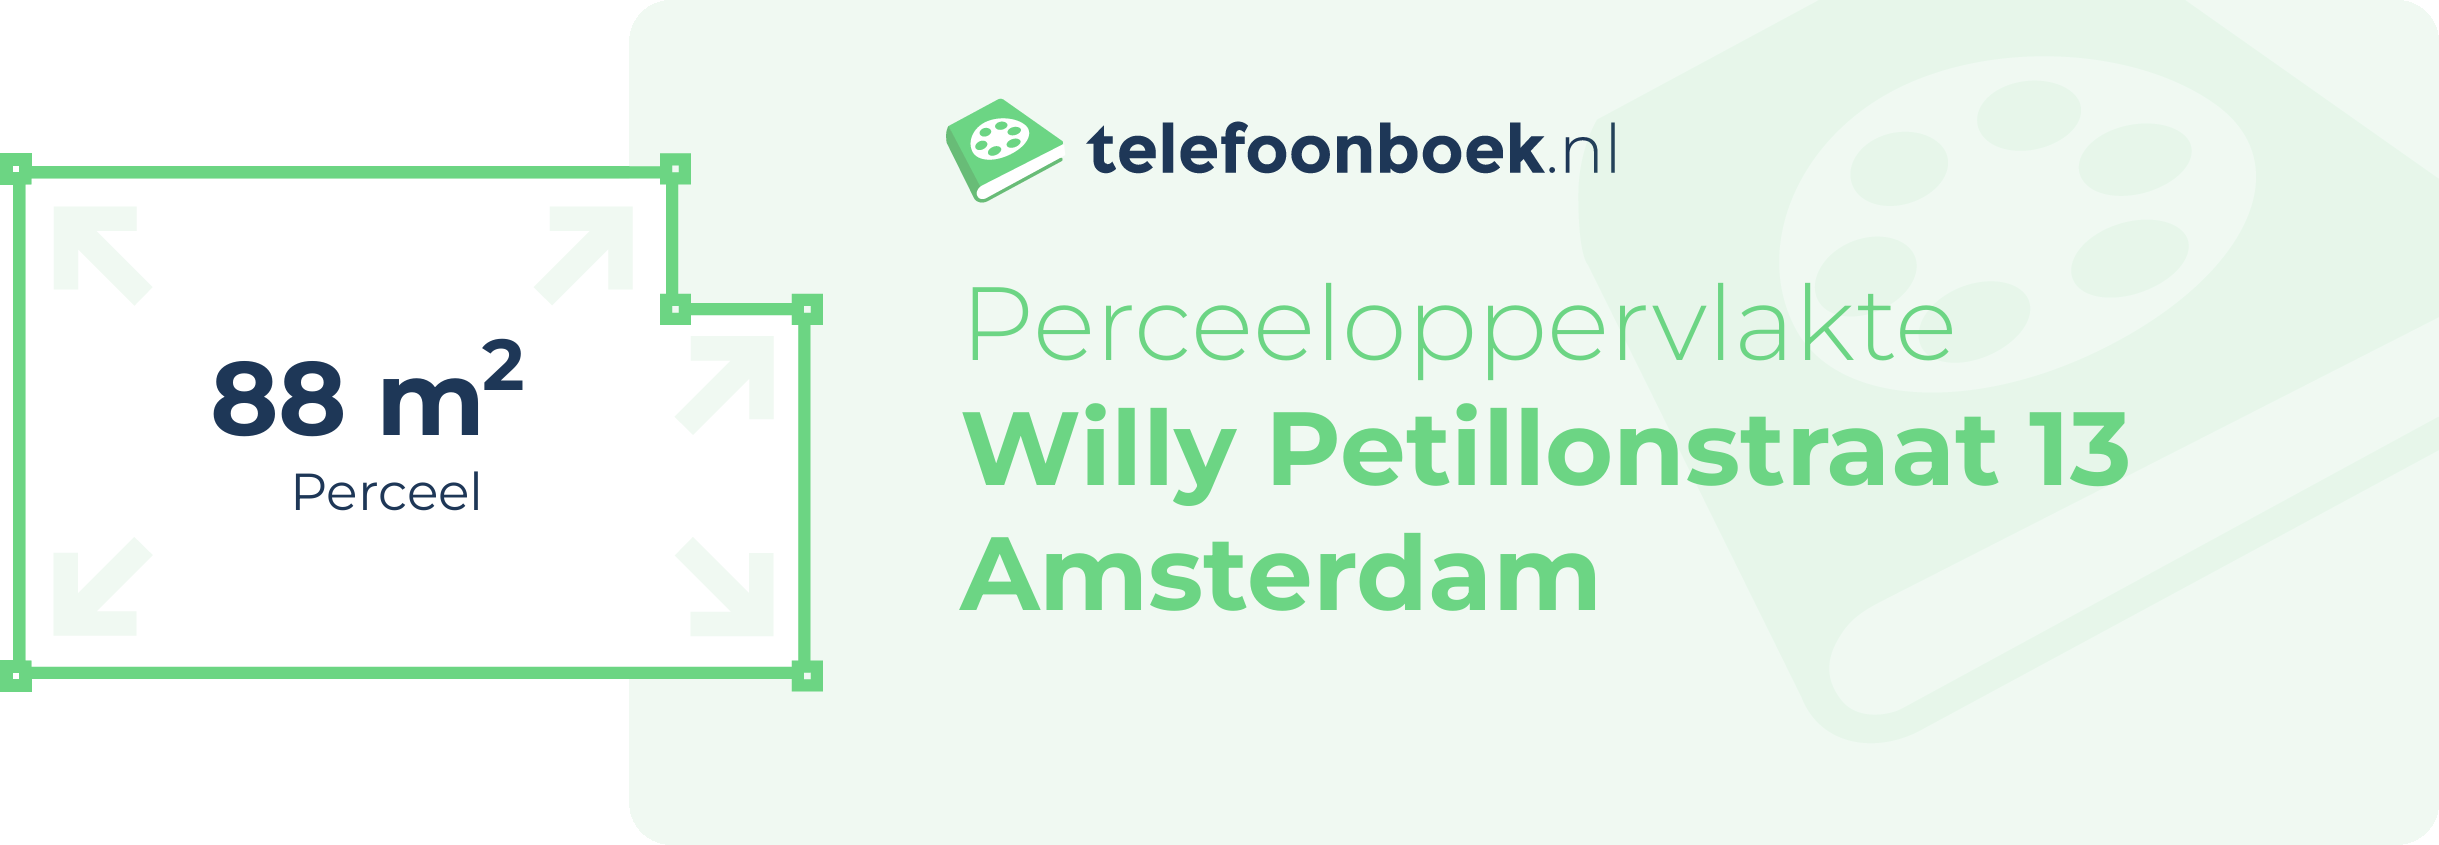 Perceeloppervlakte Willy Petillonstraat 13 Amsterdam